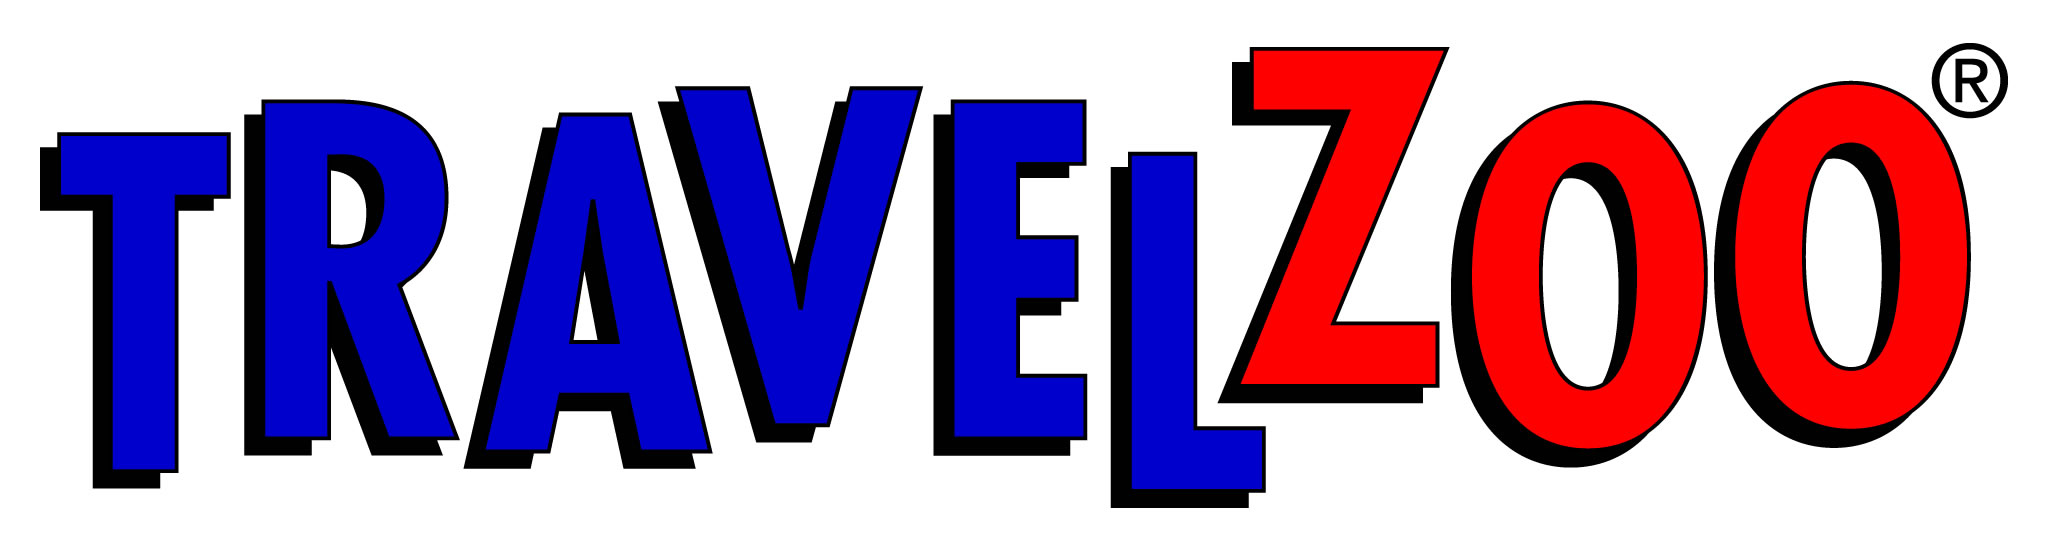 Travelzoo-Logo 11_30_2017 (1).jpg